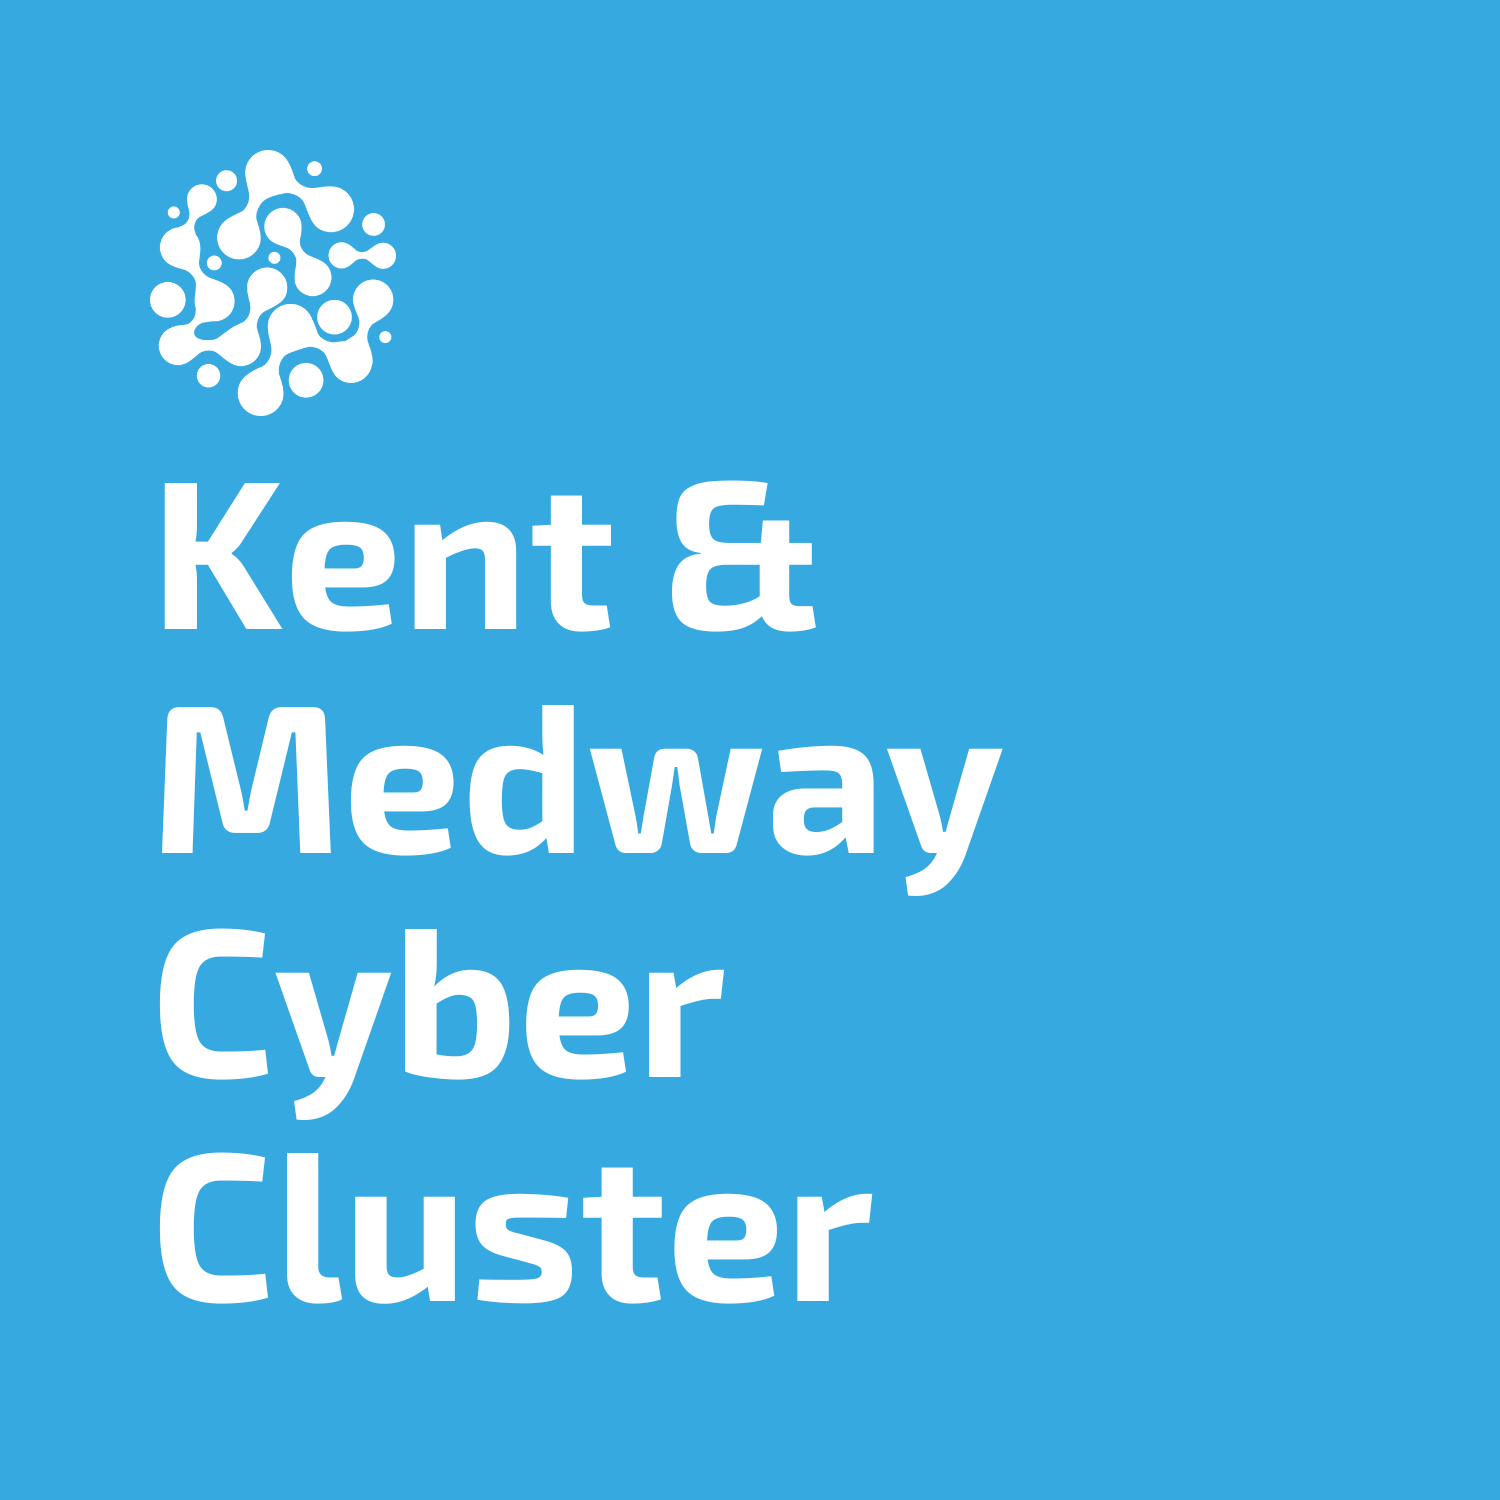 Kent & Medway Cyber Cluster